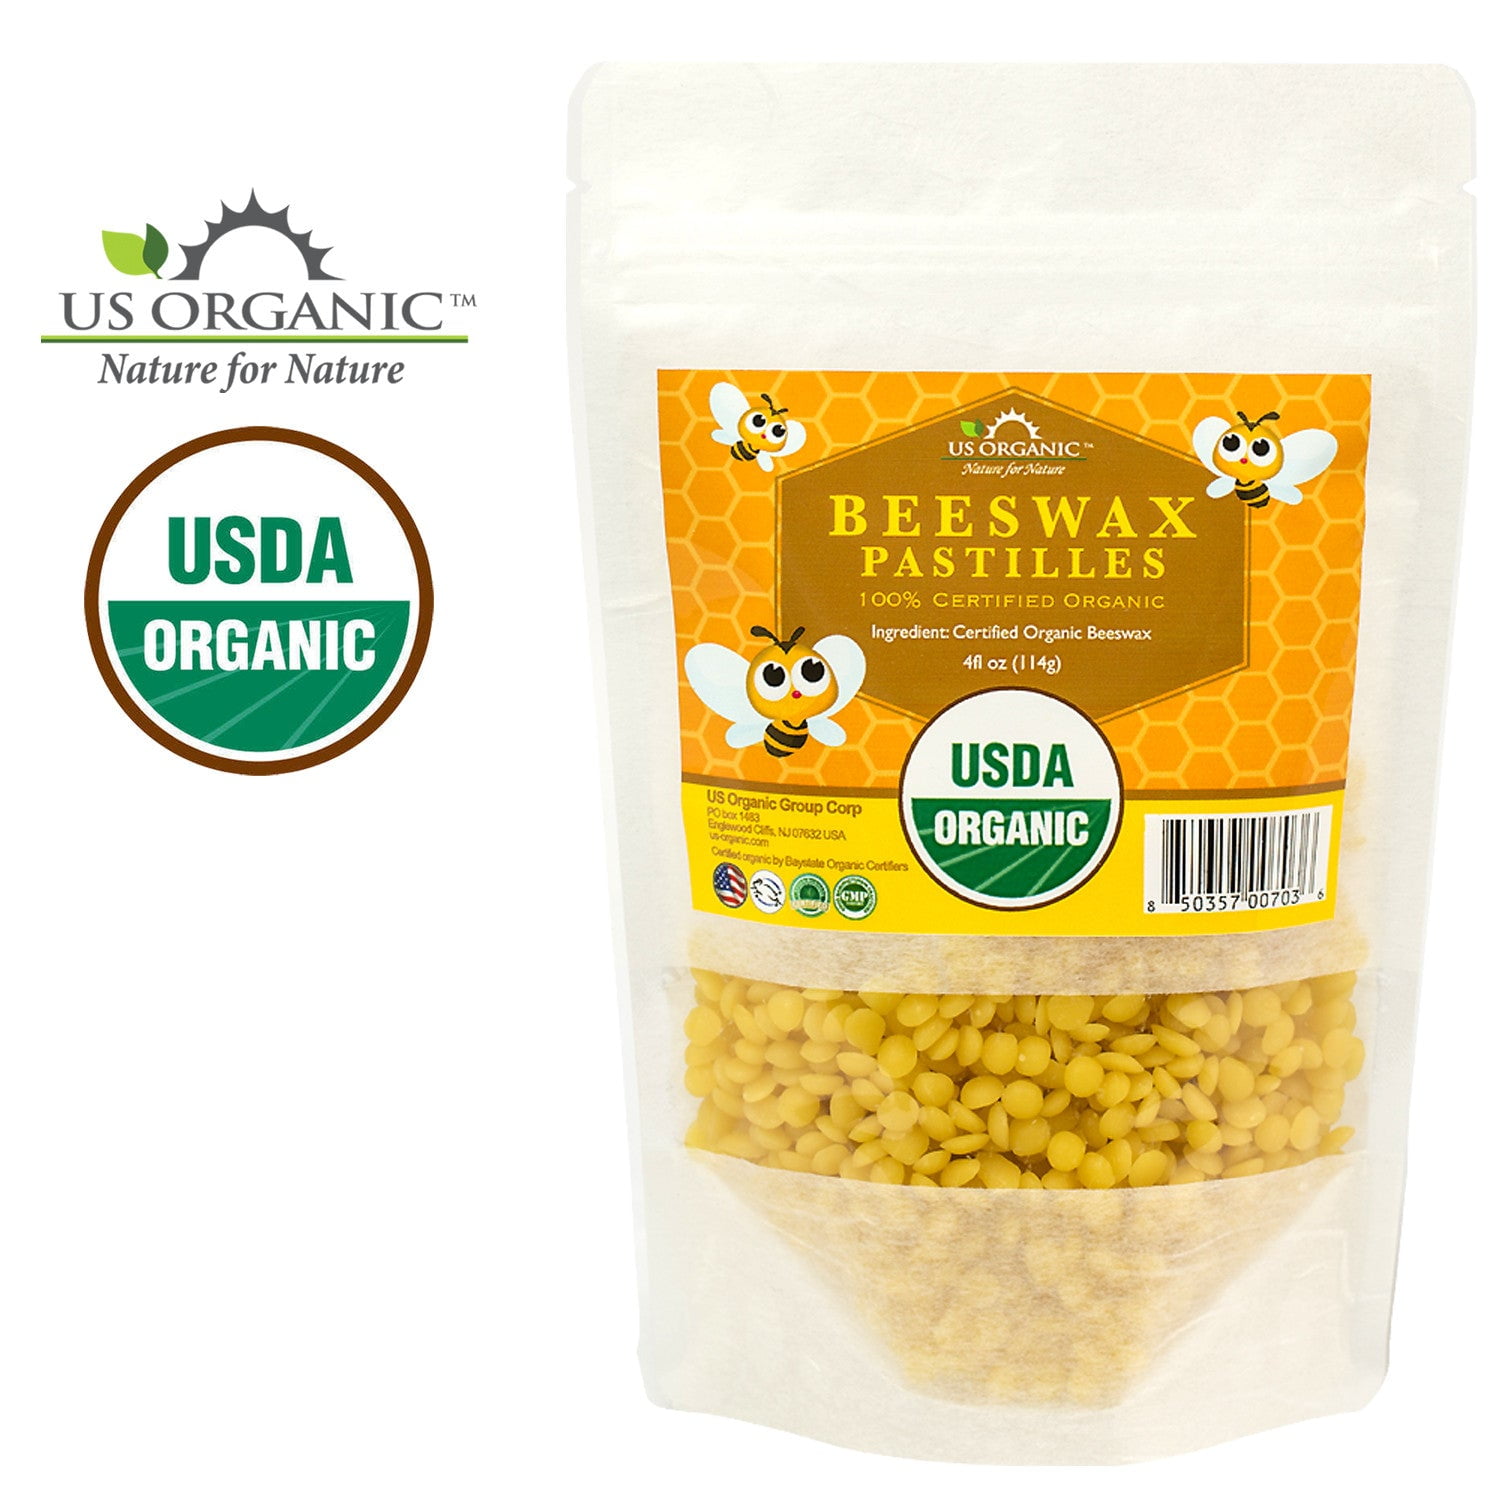 16 Oz, 1 Lb YELLOW BEESWAX Bees WAX Organic Pastilles Beads Premium Prime  Grade A 100% Pure 